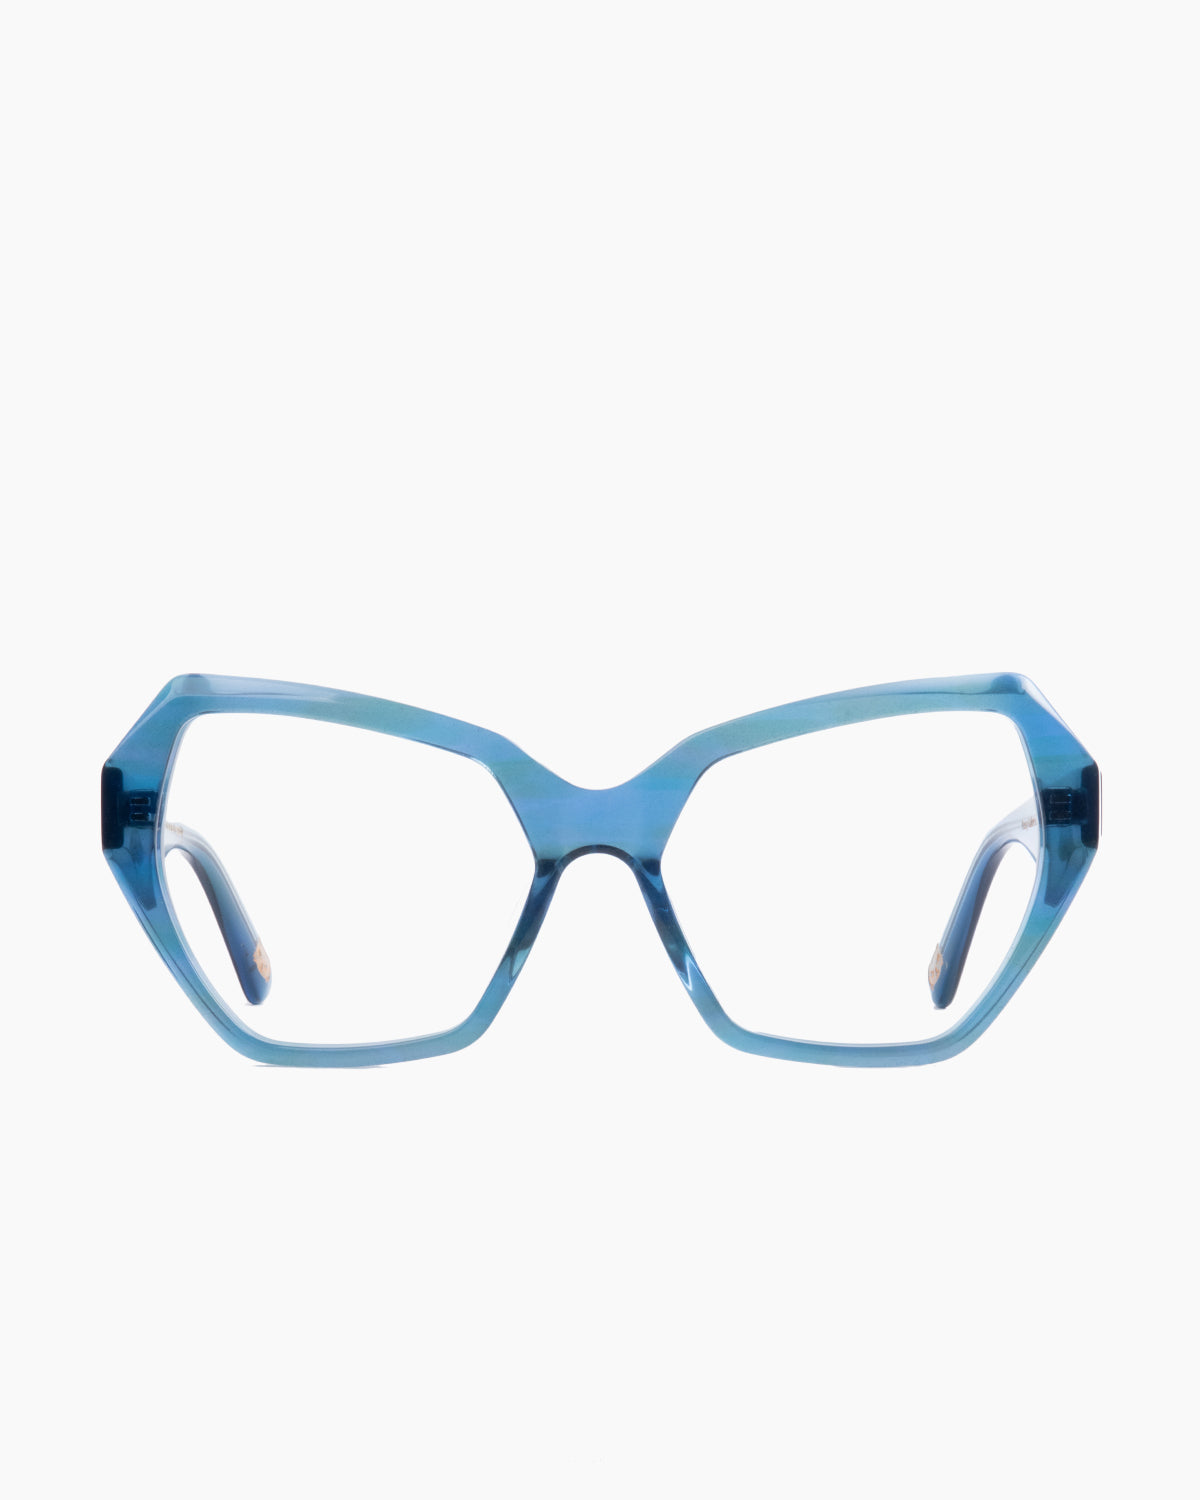 Spectacleeyeworks - Wendy - c456 | glasses bar